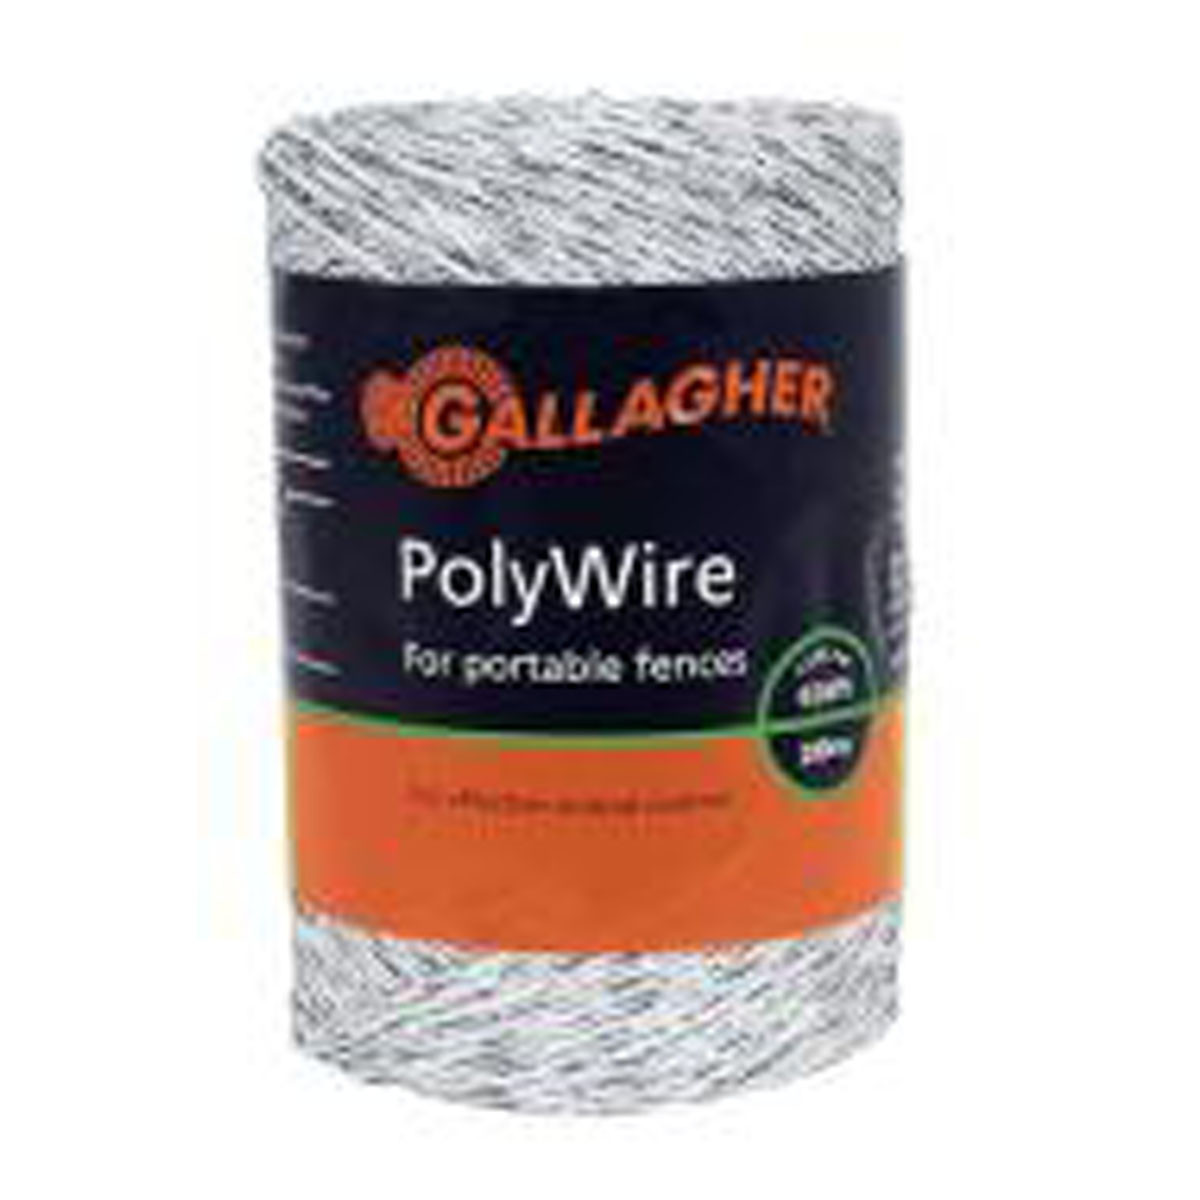 Gallagher Polywire - 200m